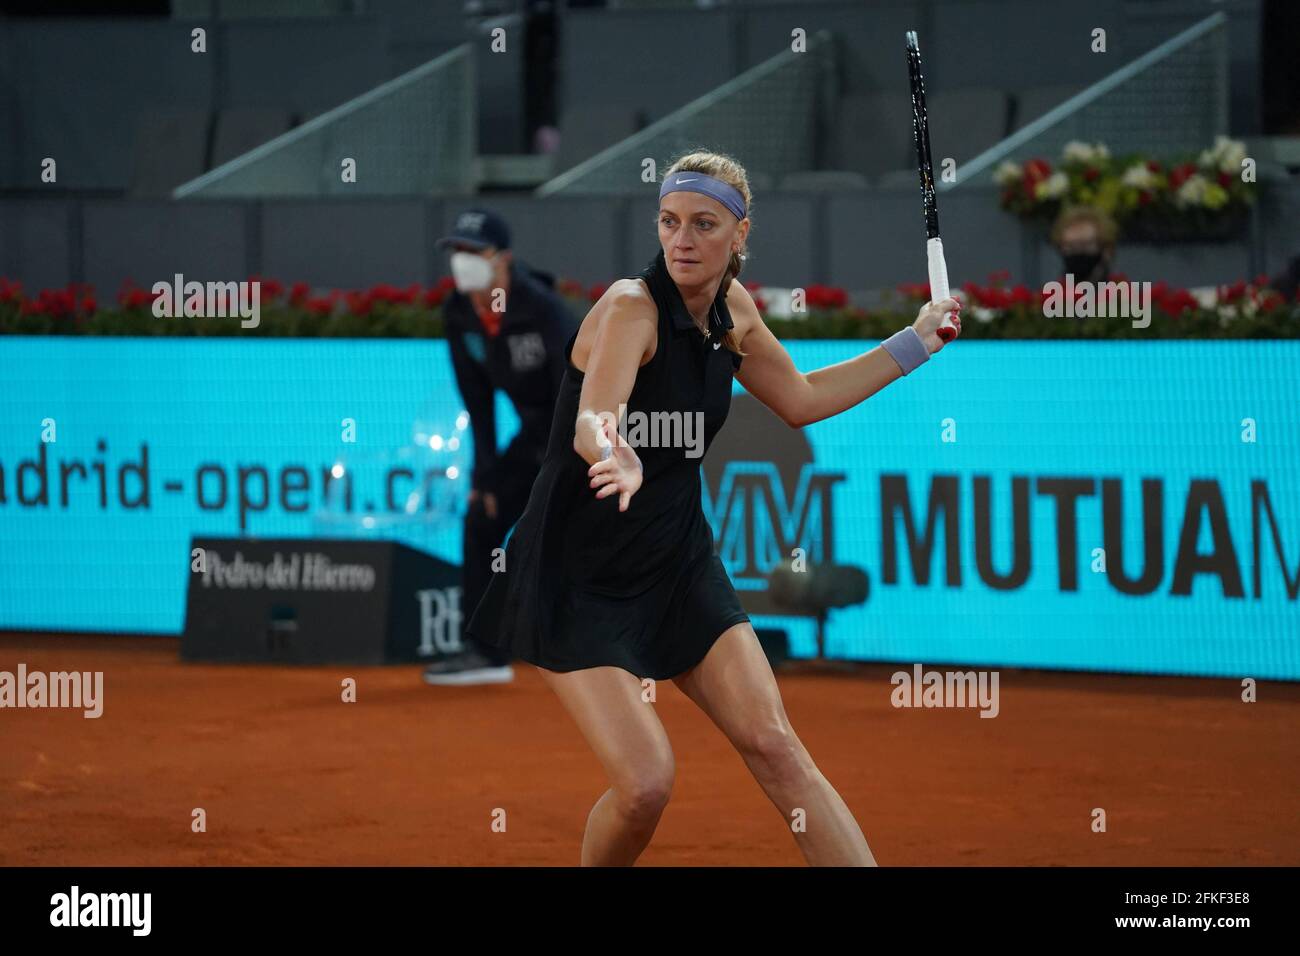 Madrid, Espagne. 1er mai 2021. Femmes célibataires Match Petra Kvitova  contre Angélique Curber le troisième jour de la WTA 1000 - Mutua Madrid  Open 2021 à la Caja Magica le 01 mai